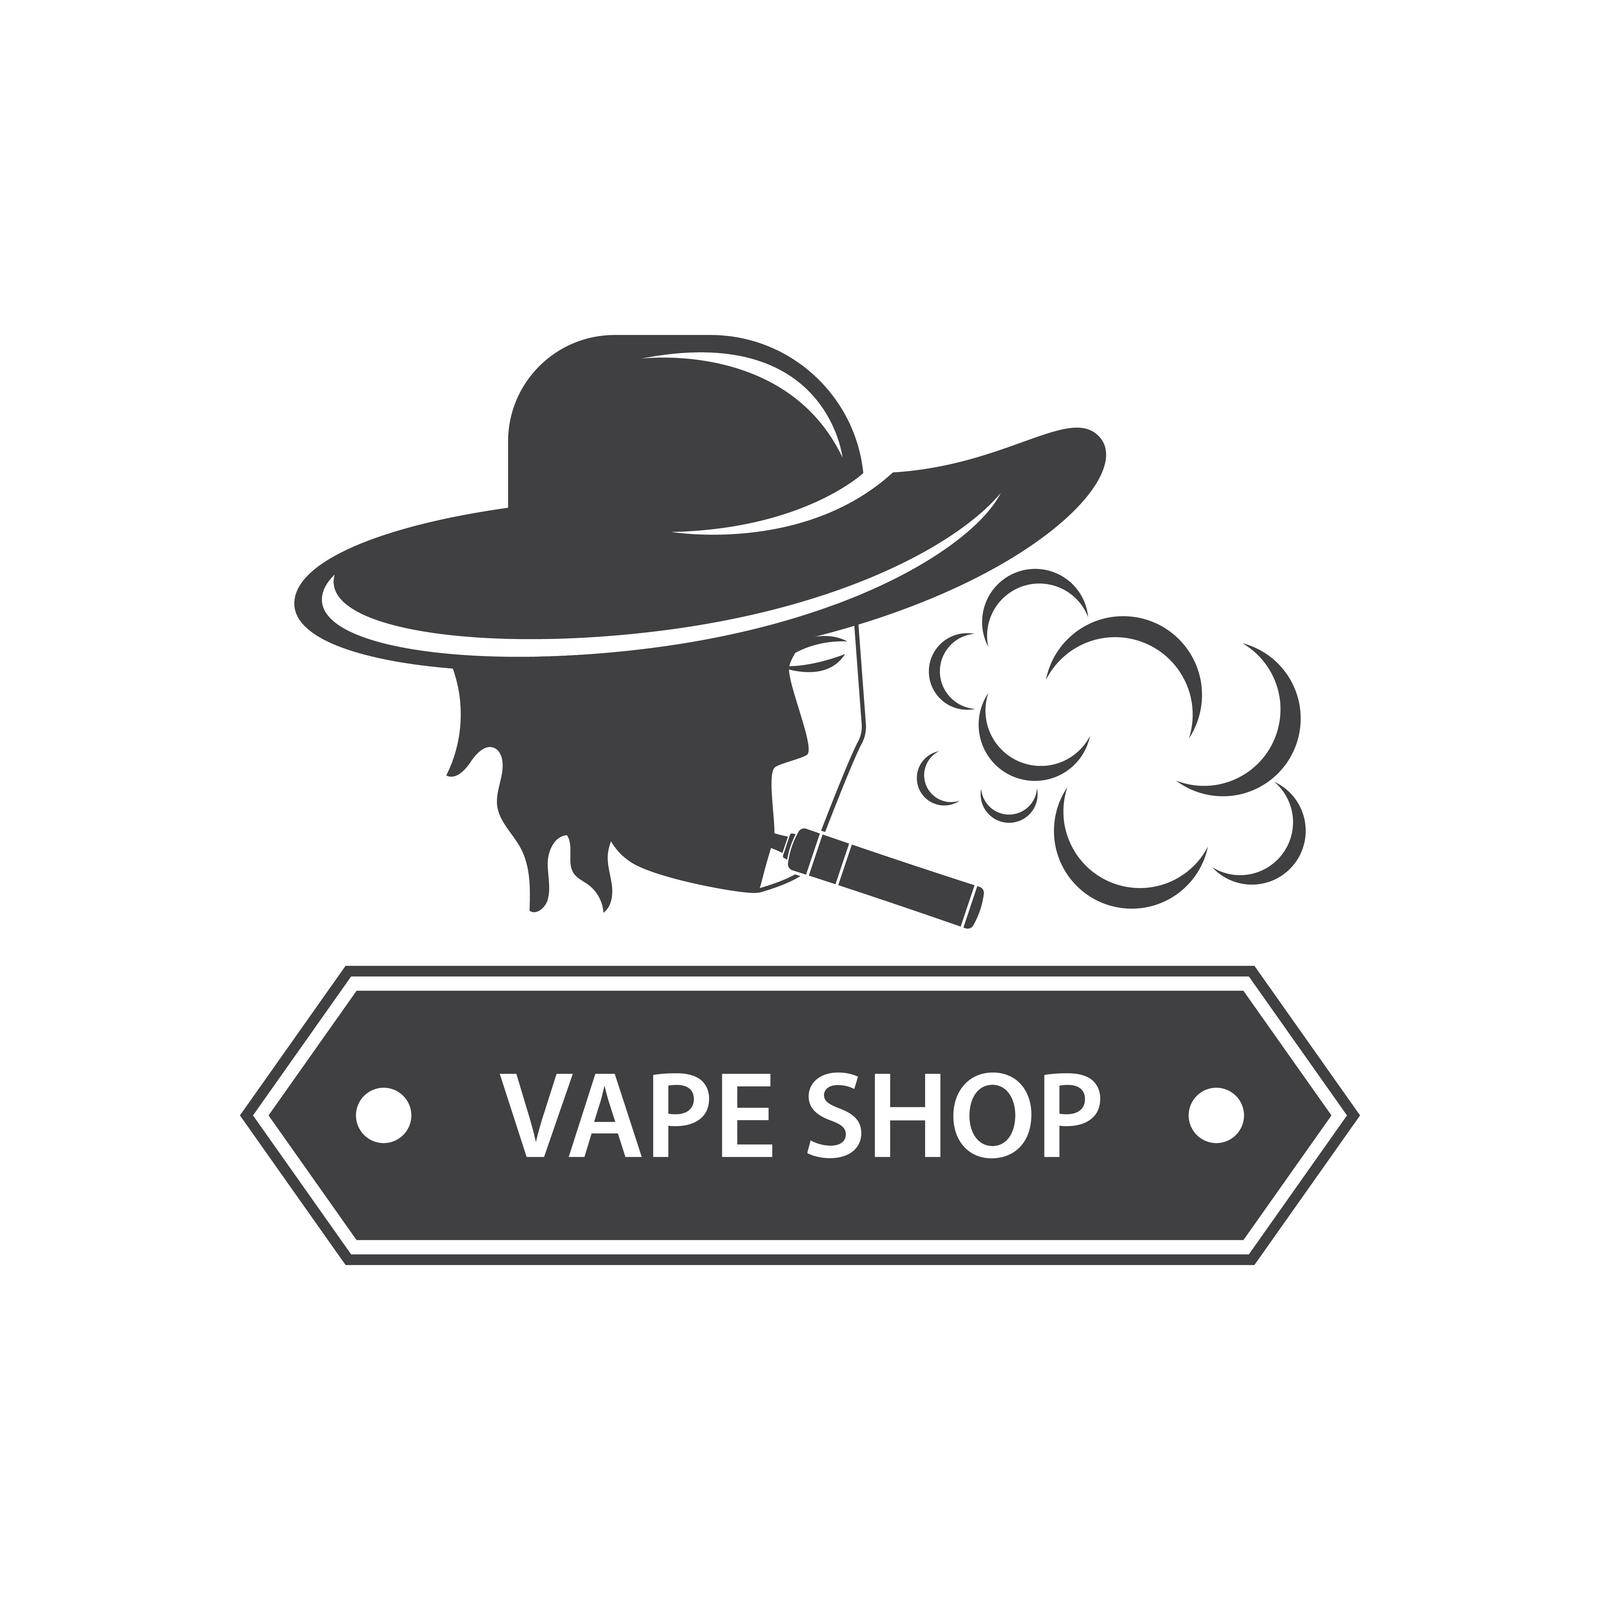 Vapor or vape logo illustration flat design template